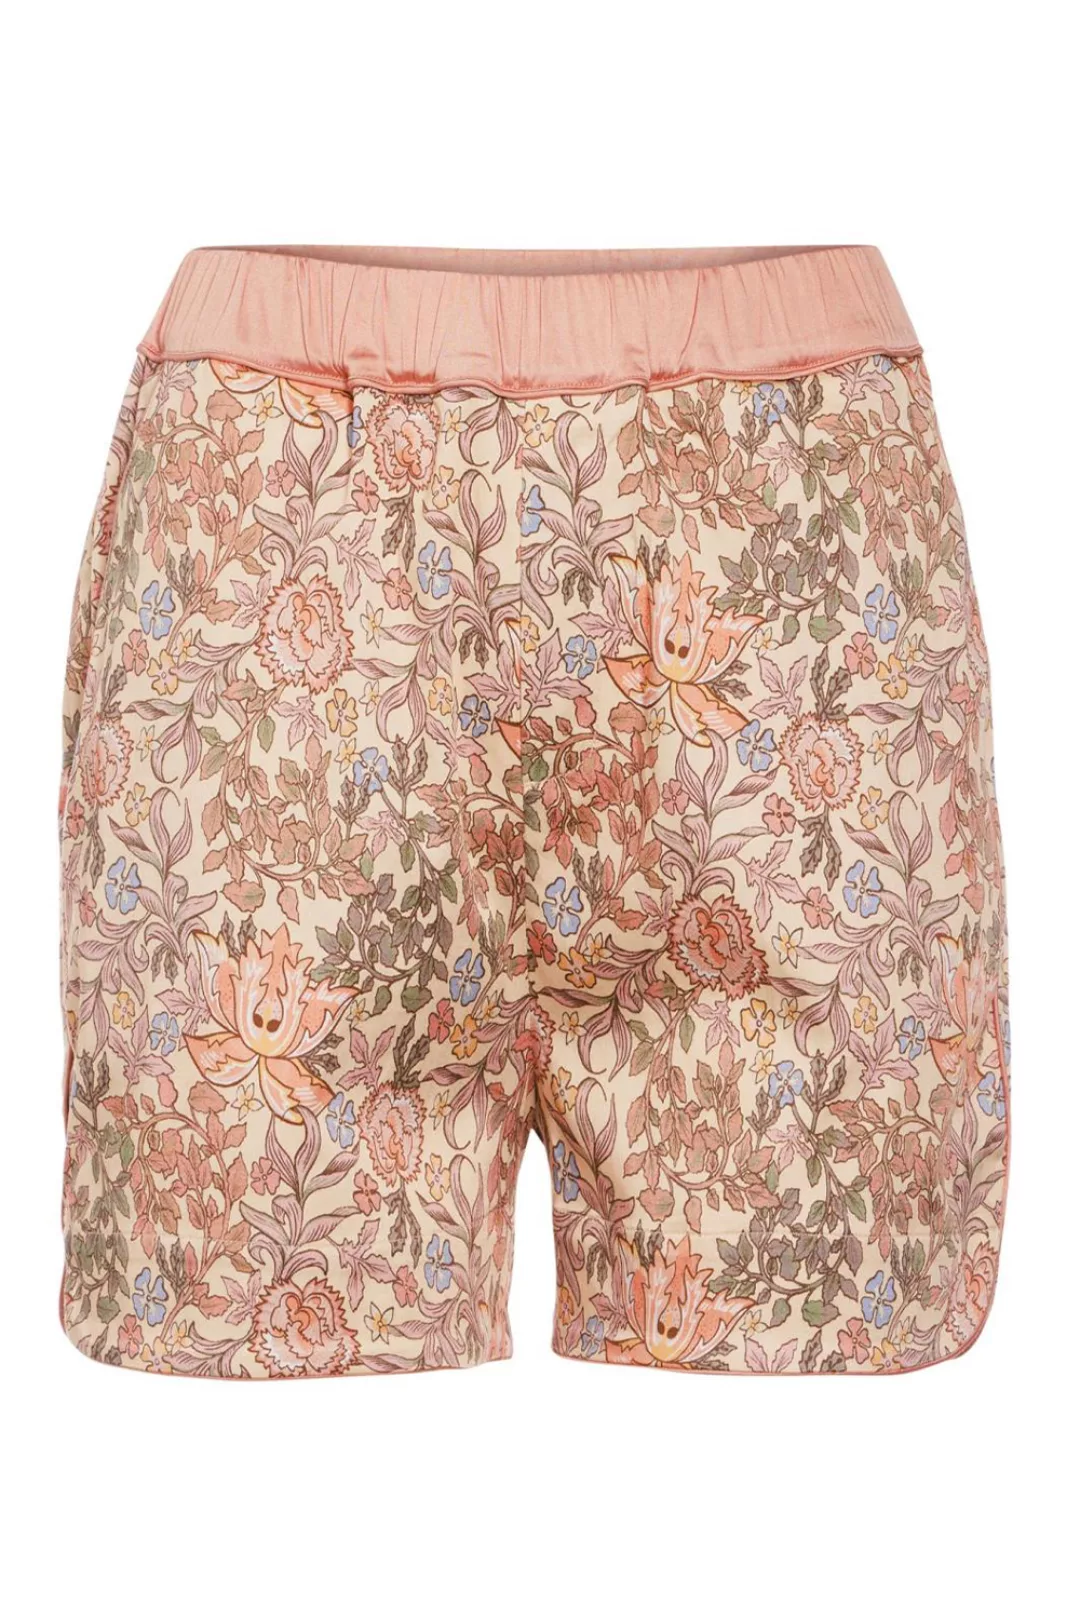 ESSENZA Bella Ophelia Shorts sahara Loungewear 3 38 mehrfarbig günstig online kaufen